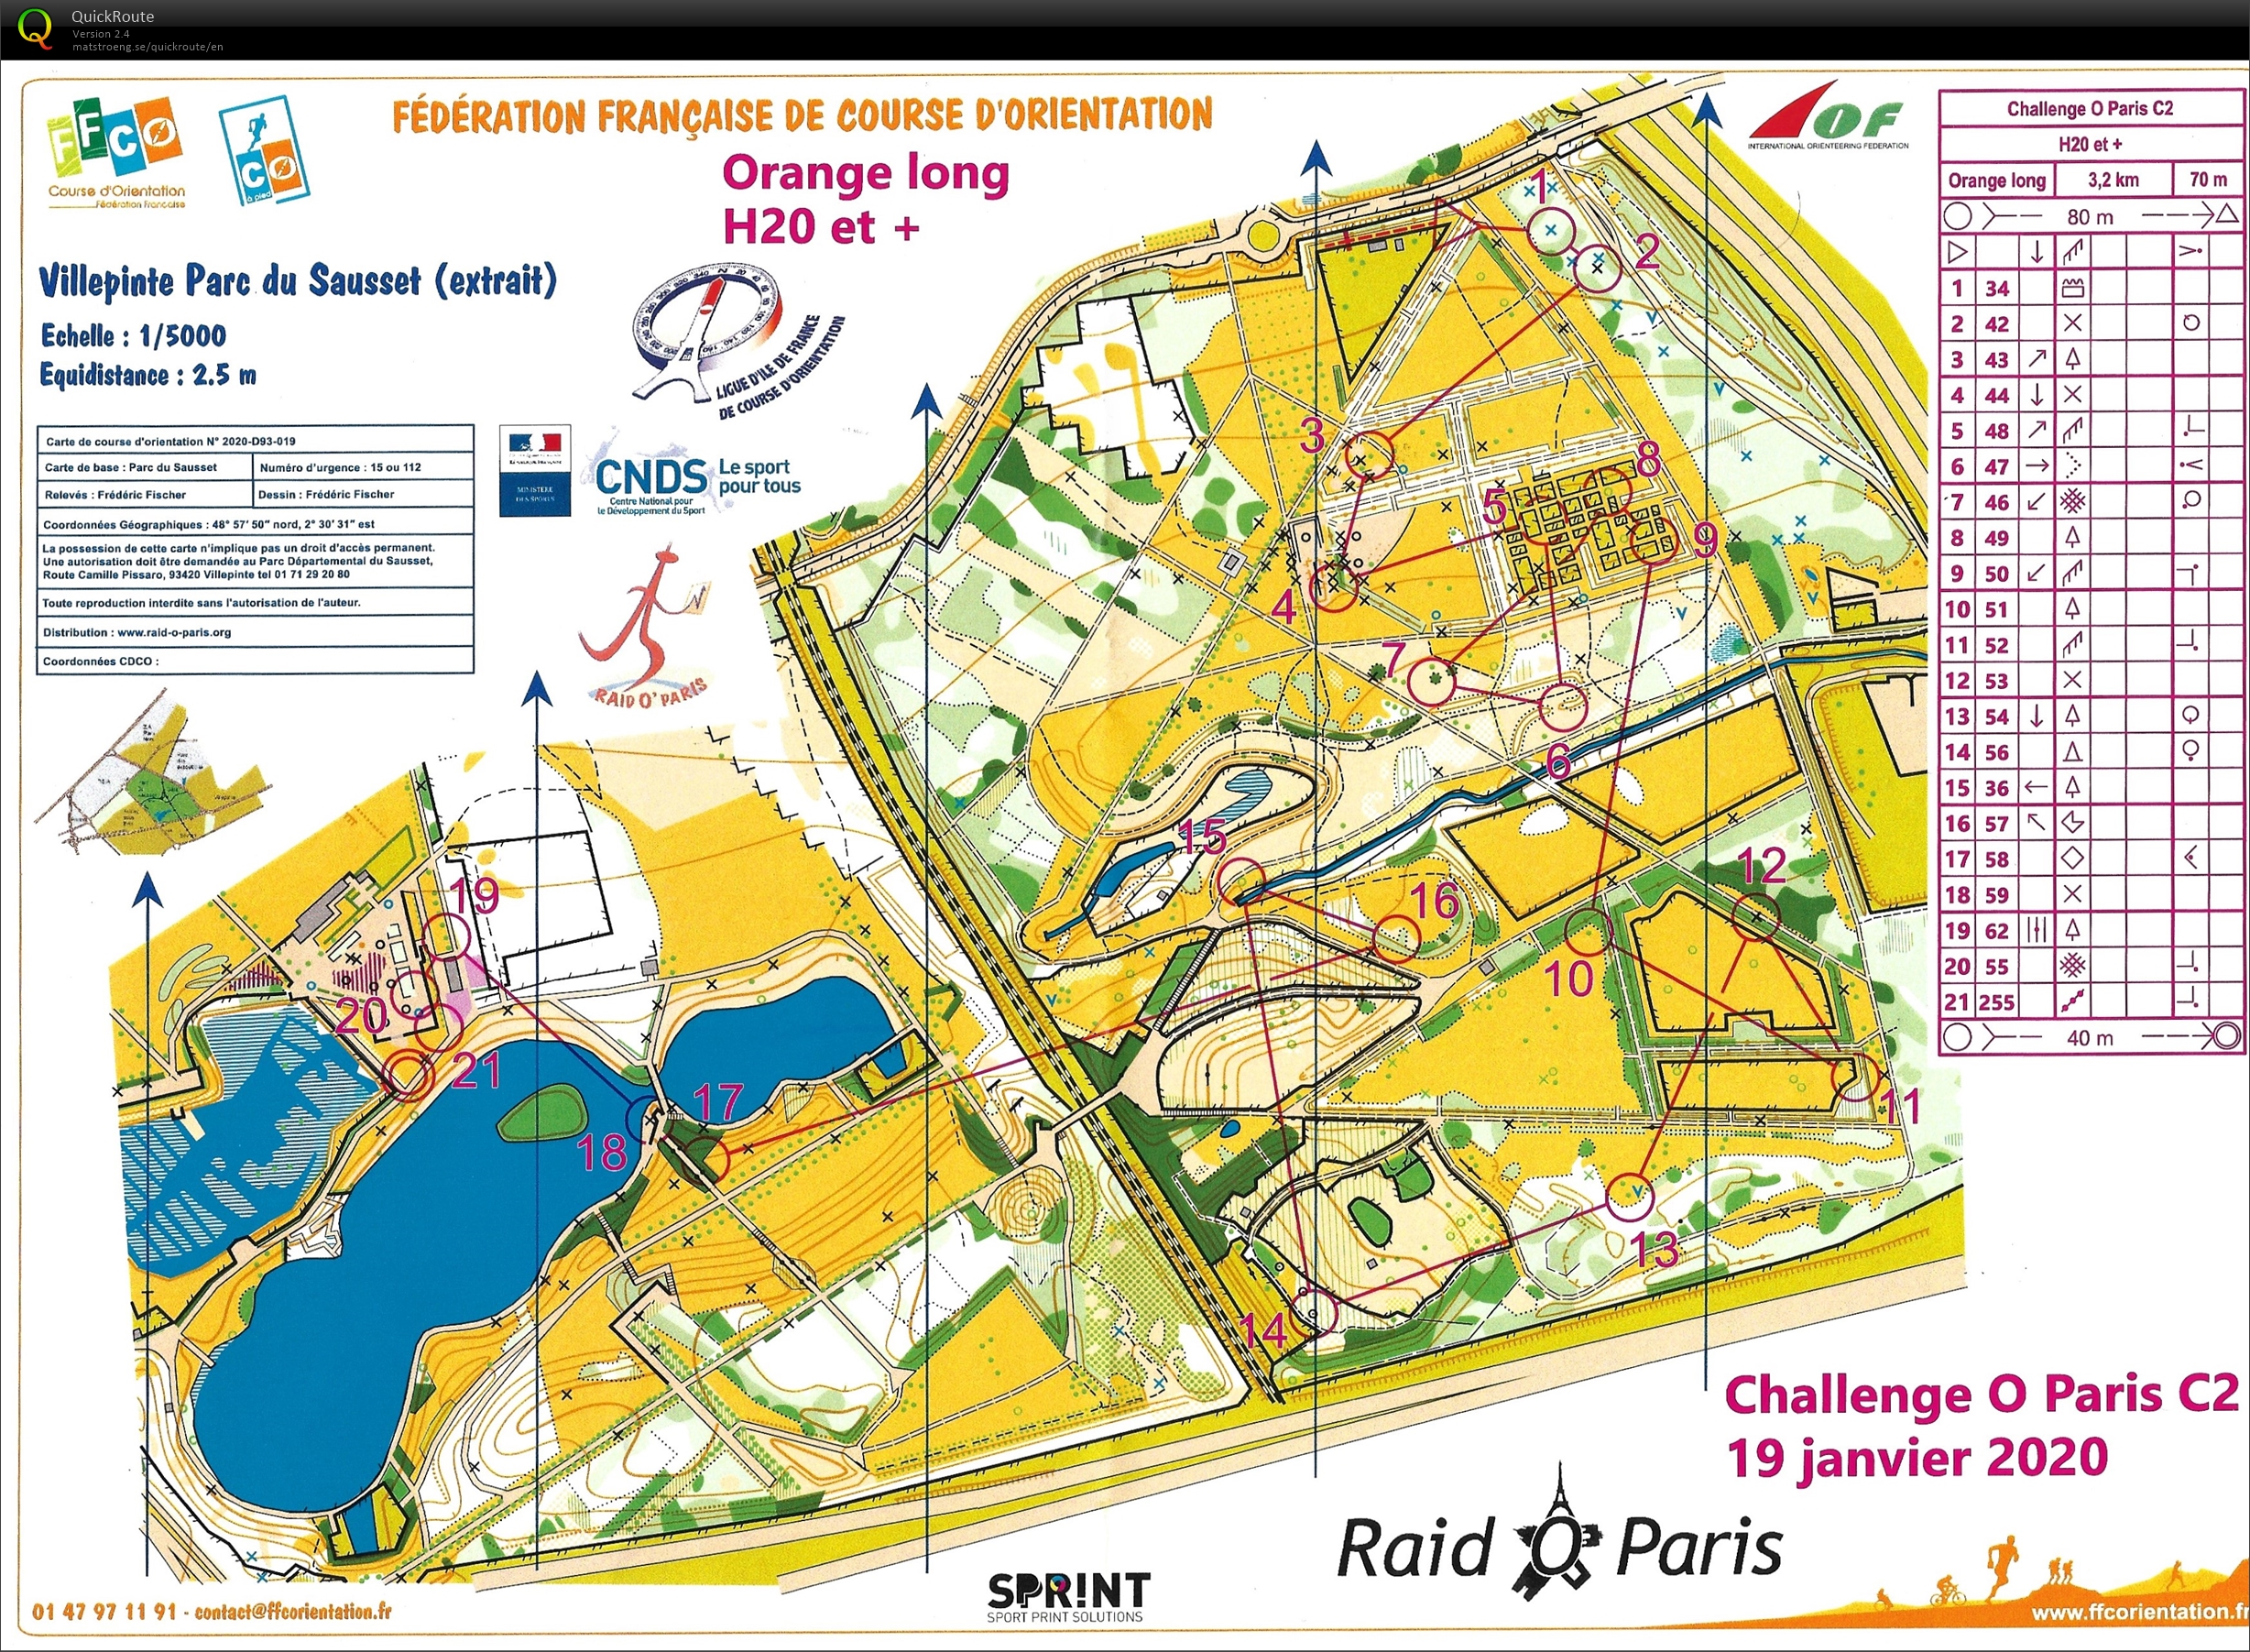 Challenge O Paris C2 Sprint (19.01.2020)